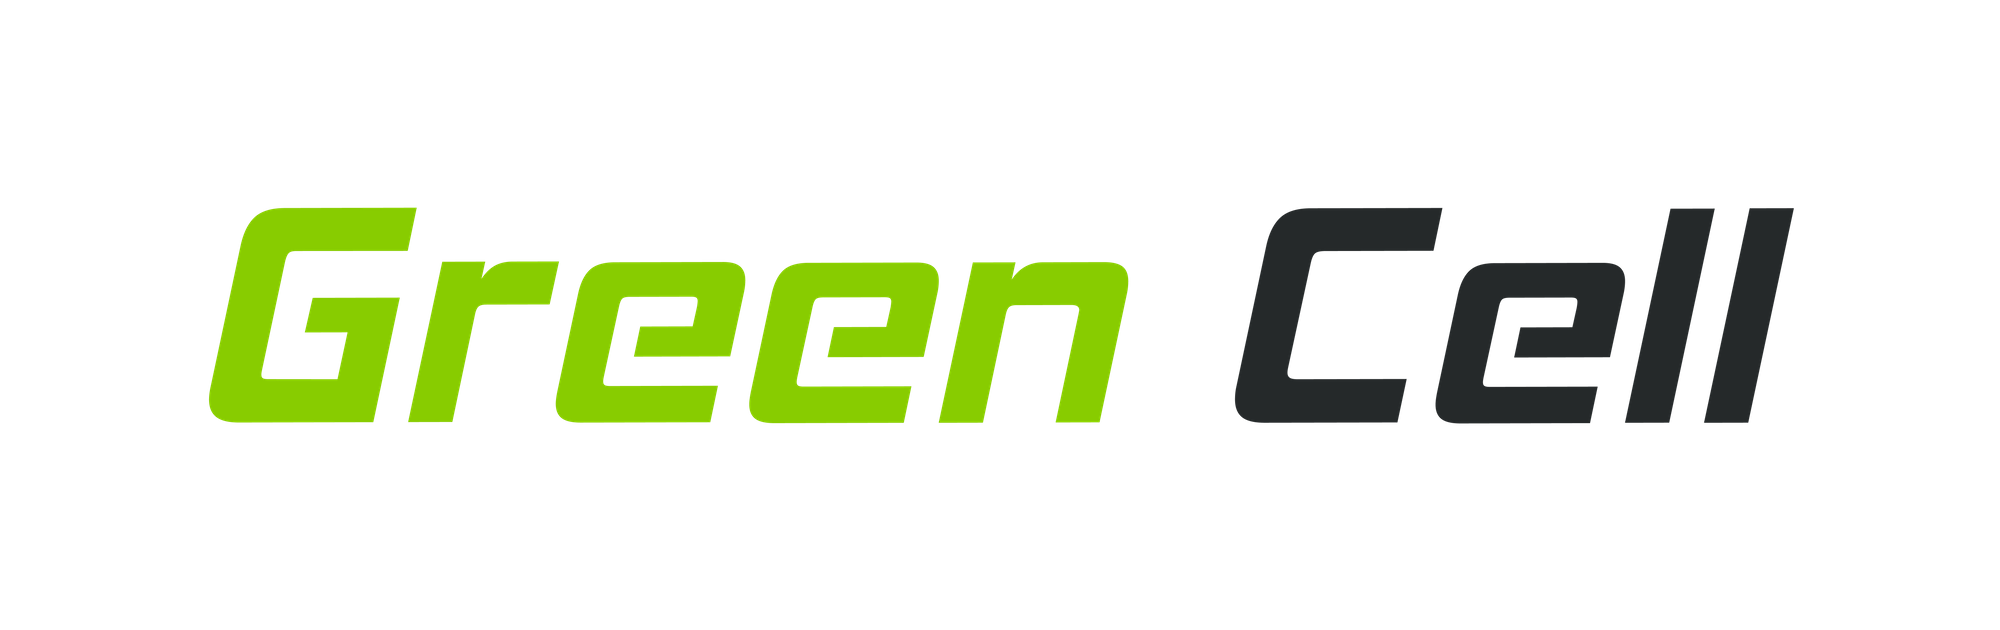 Green Cell Banner Logo